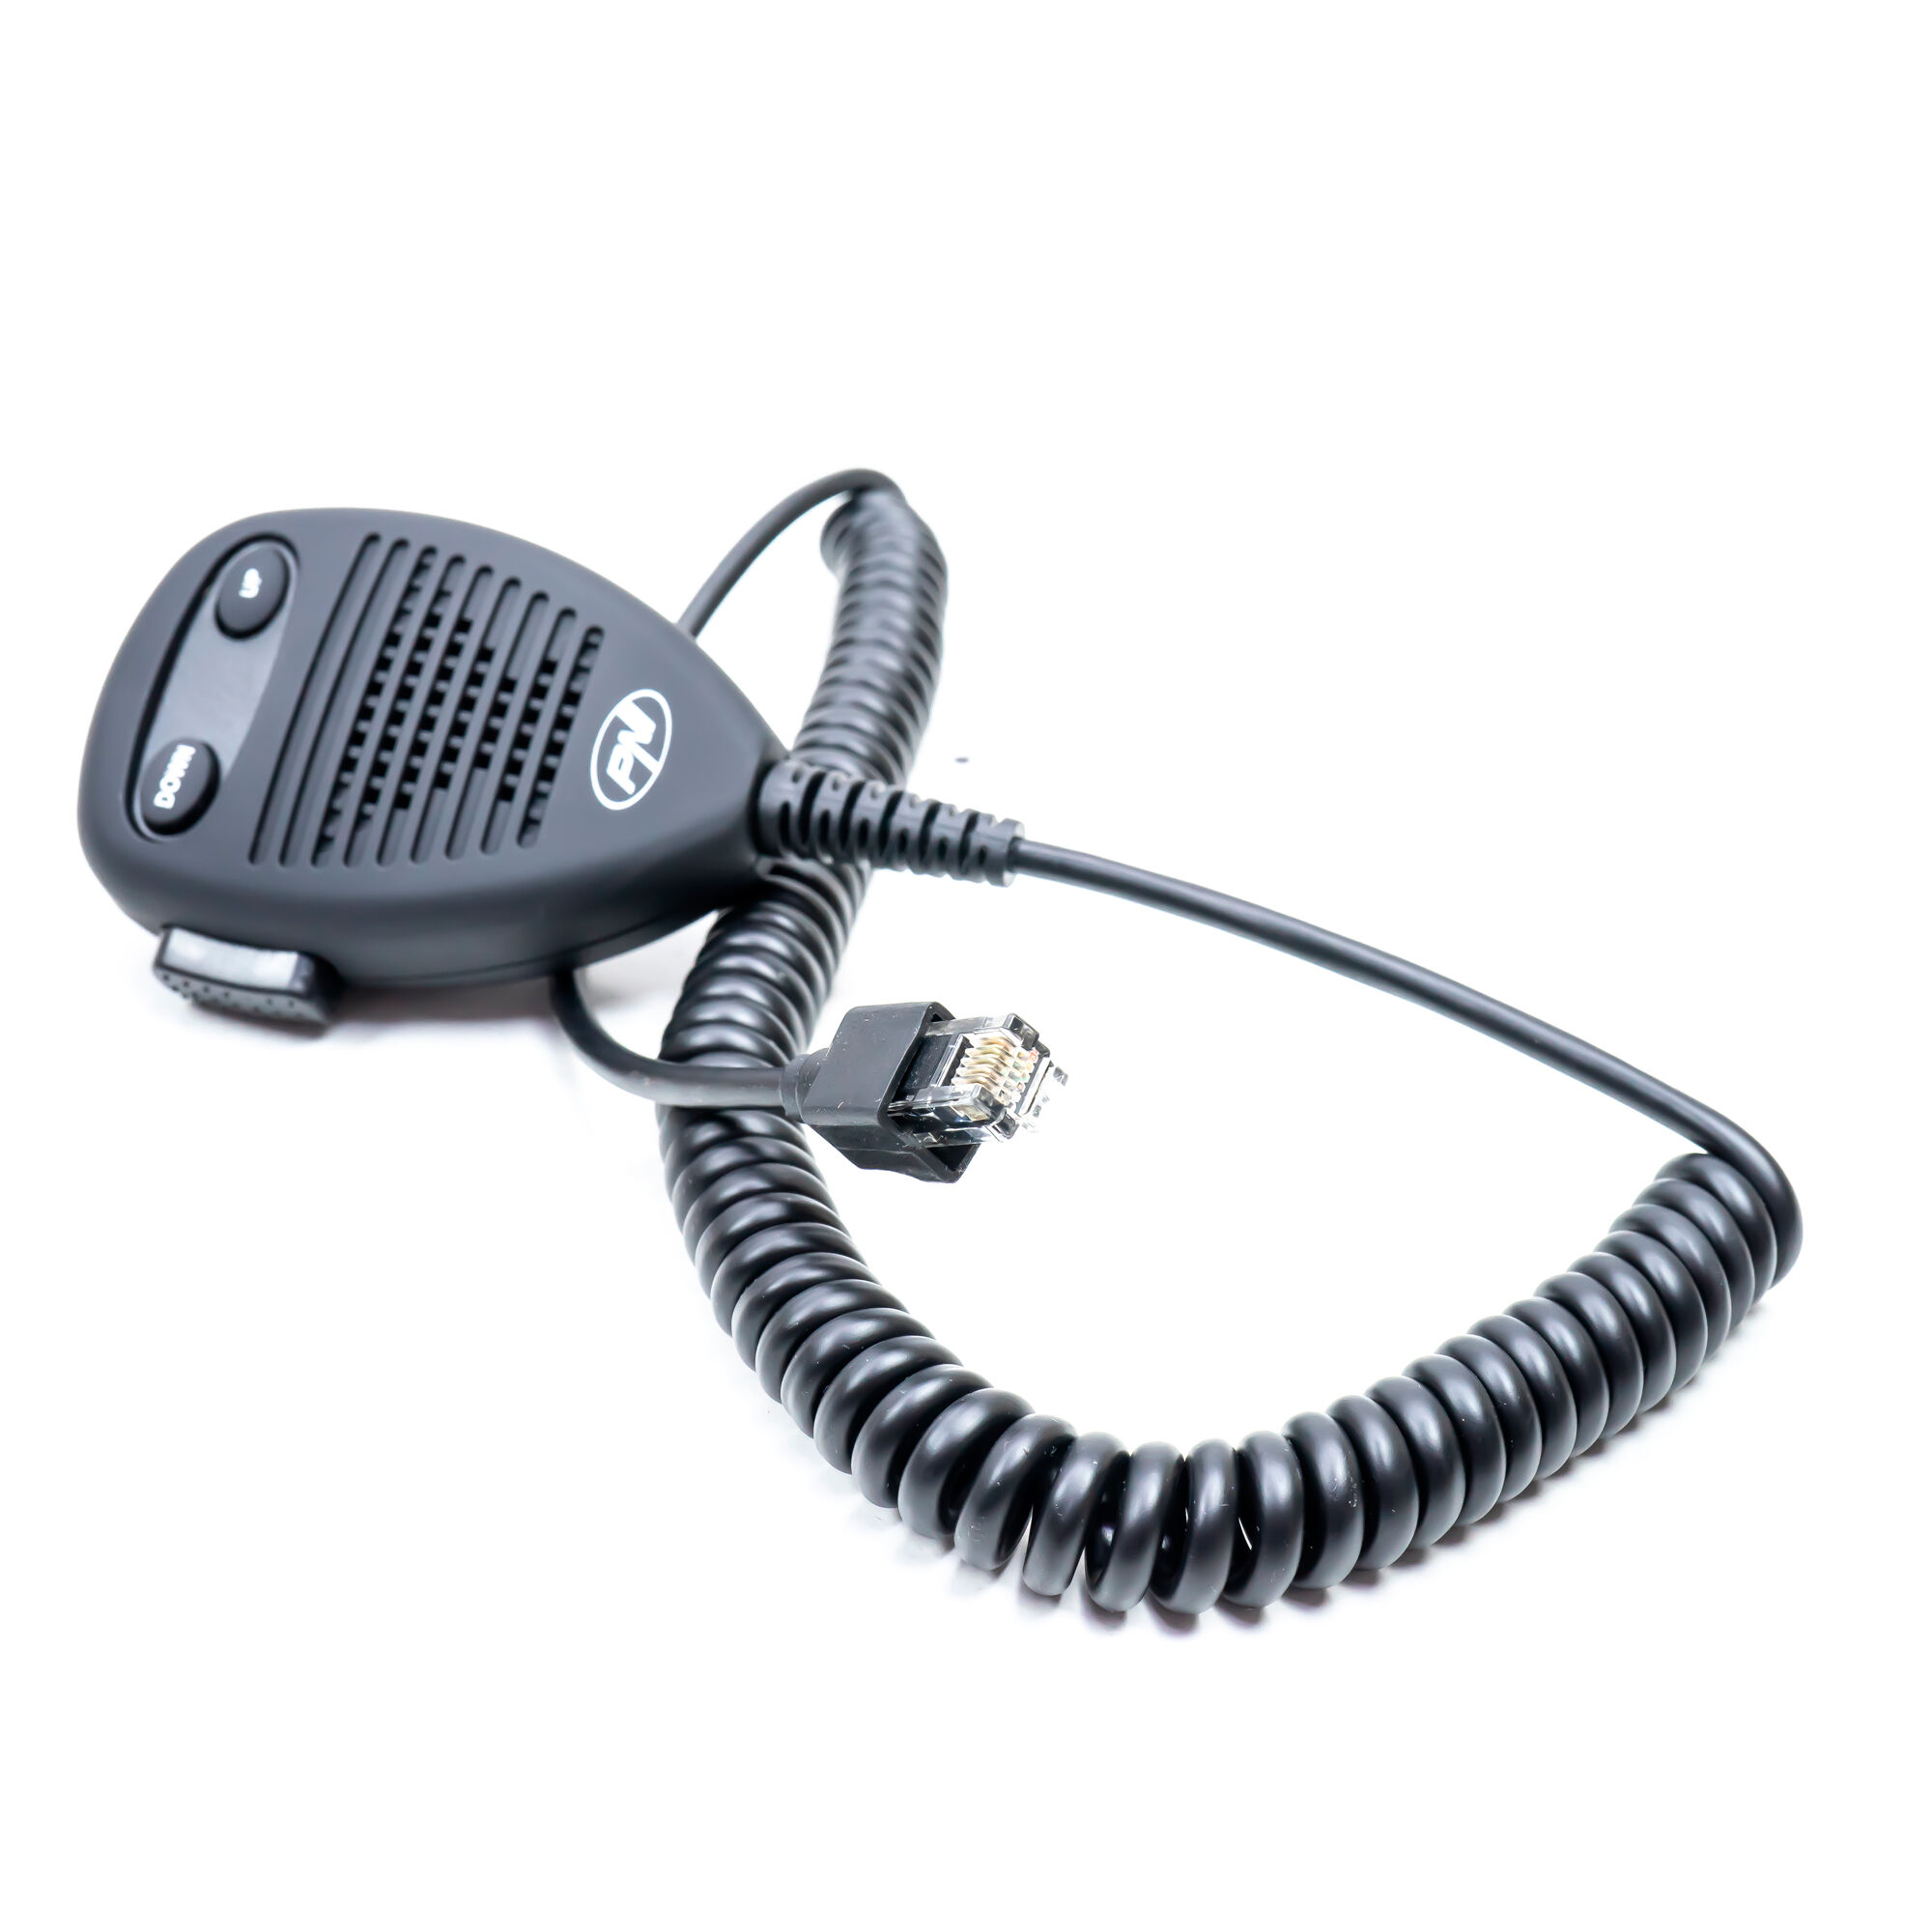 Ersatzmikrofon für CB-Funkgeräte PNI HP 6500 und PNI HP 7120 - Bild 1